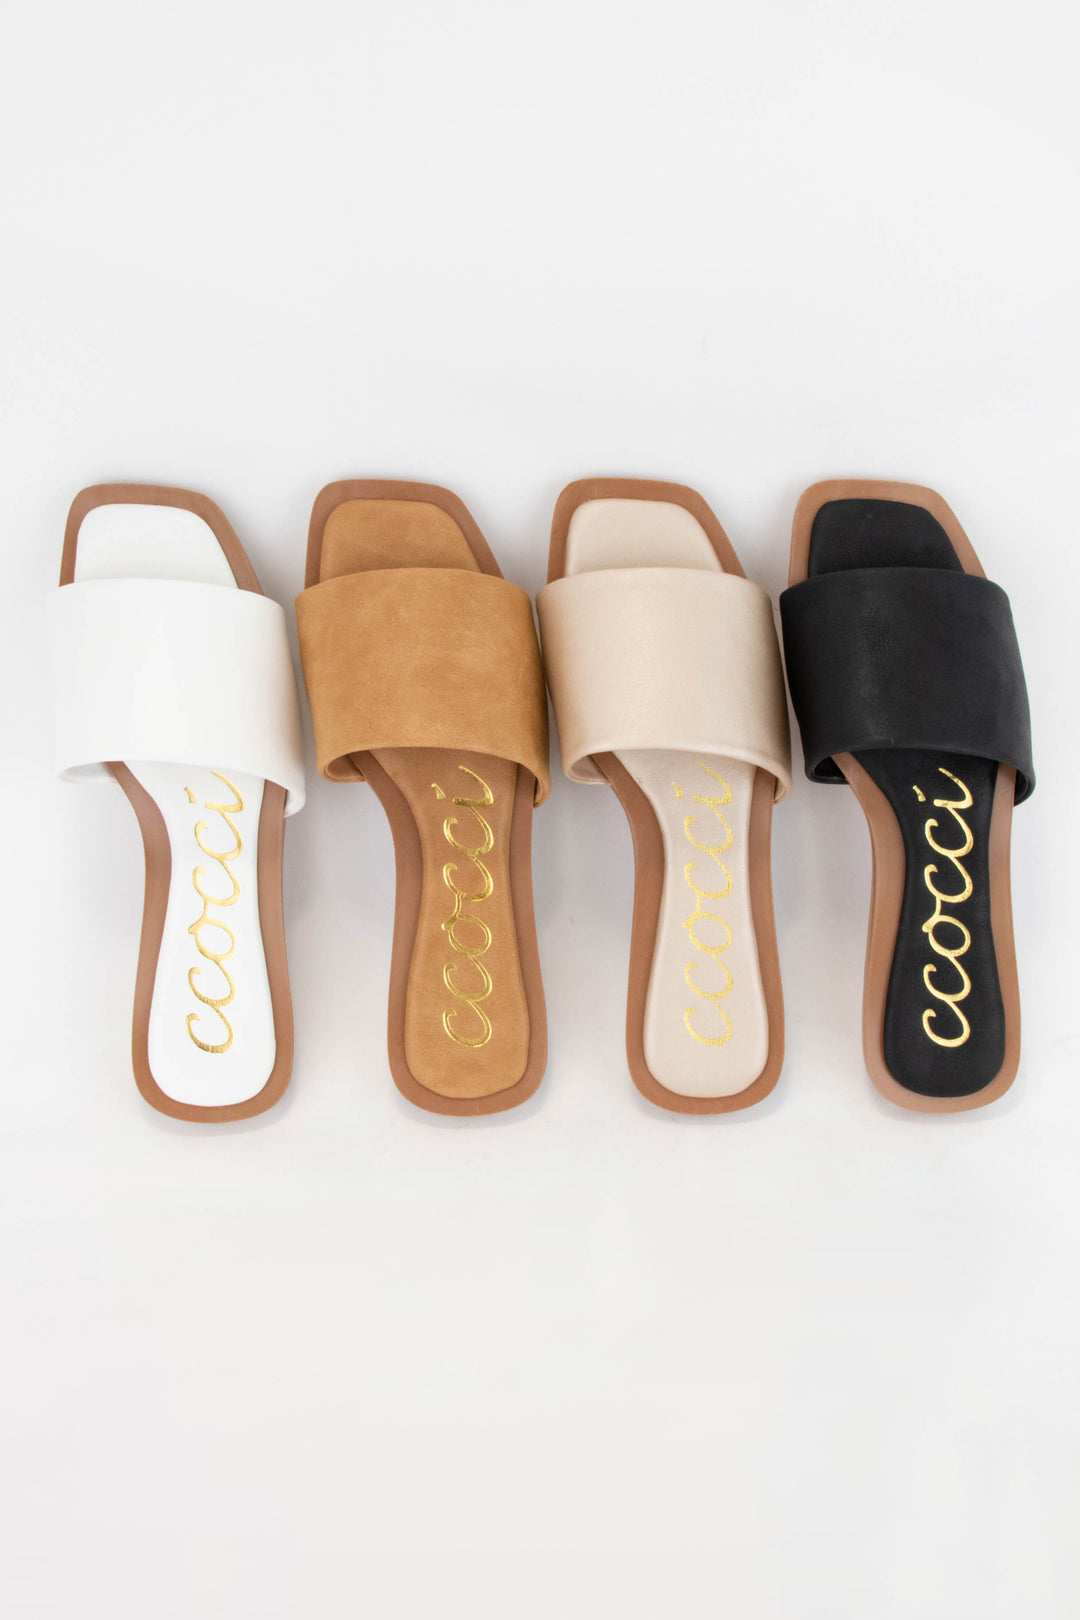 The Kelly Champagne Leather Sandal Slides